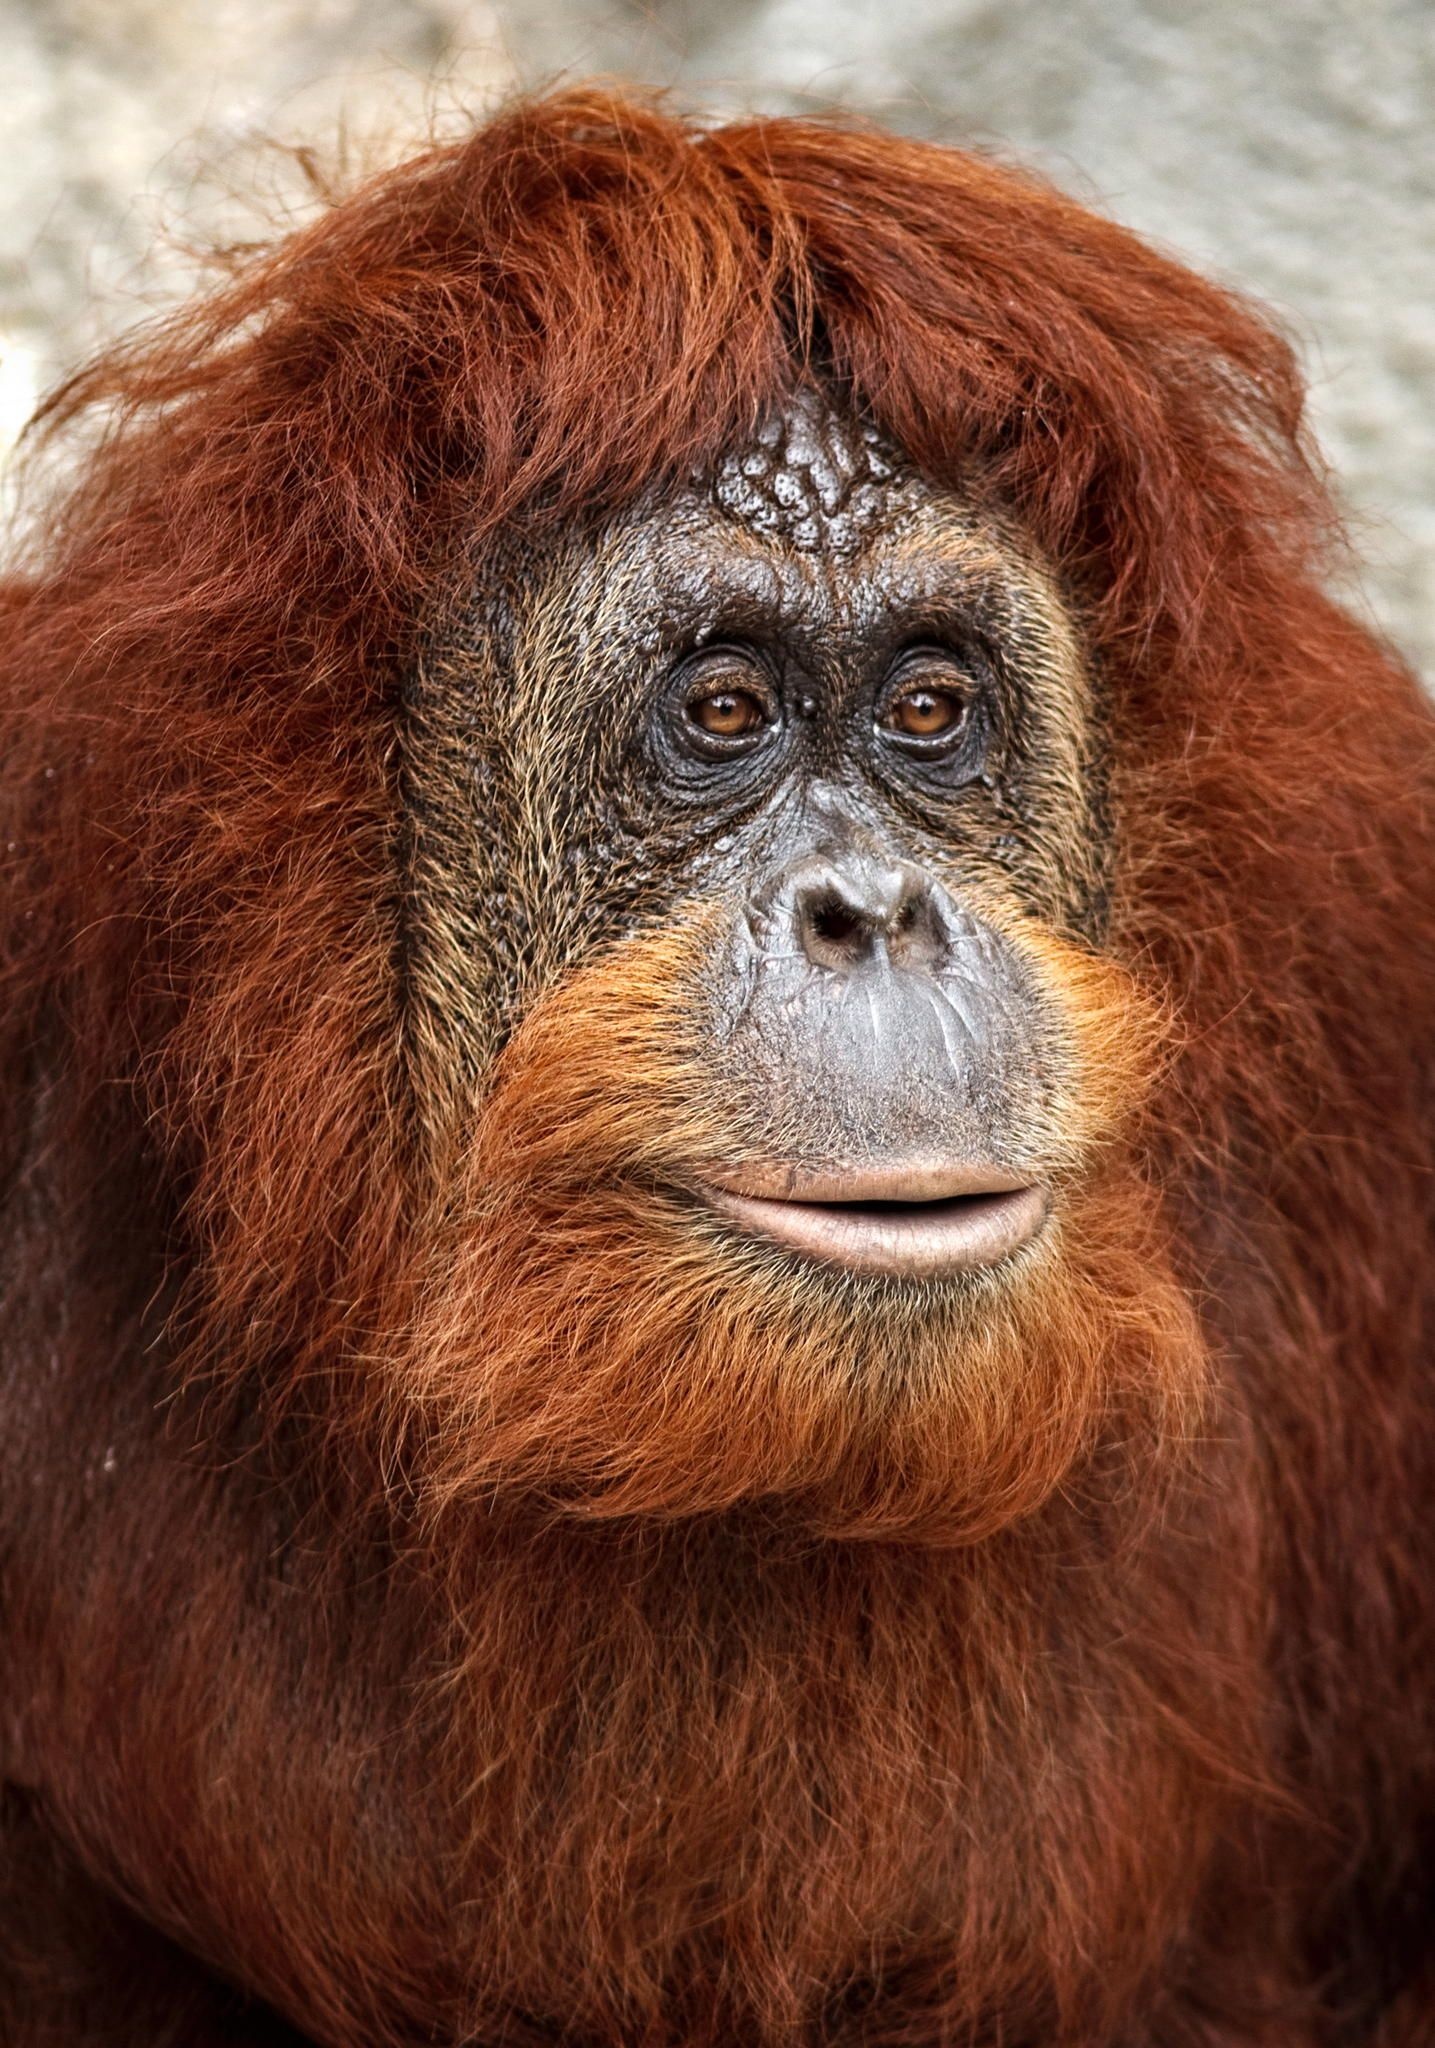 HD wallpaper, 1440X2050 Hd Phone, Orangutan By Roberto Adrian, Breathtaking Photography, Mobile Hd Orangutan Wallpaper Photo, Primates, Rare Animals